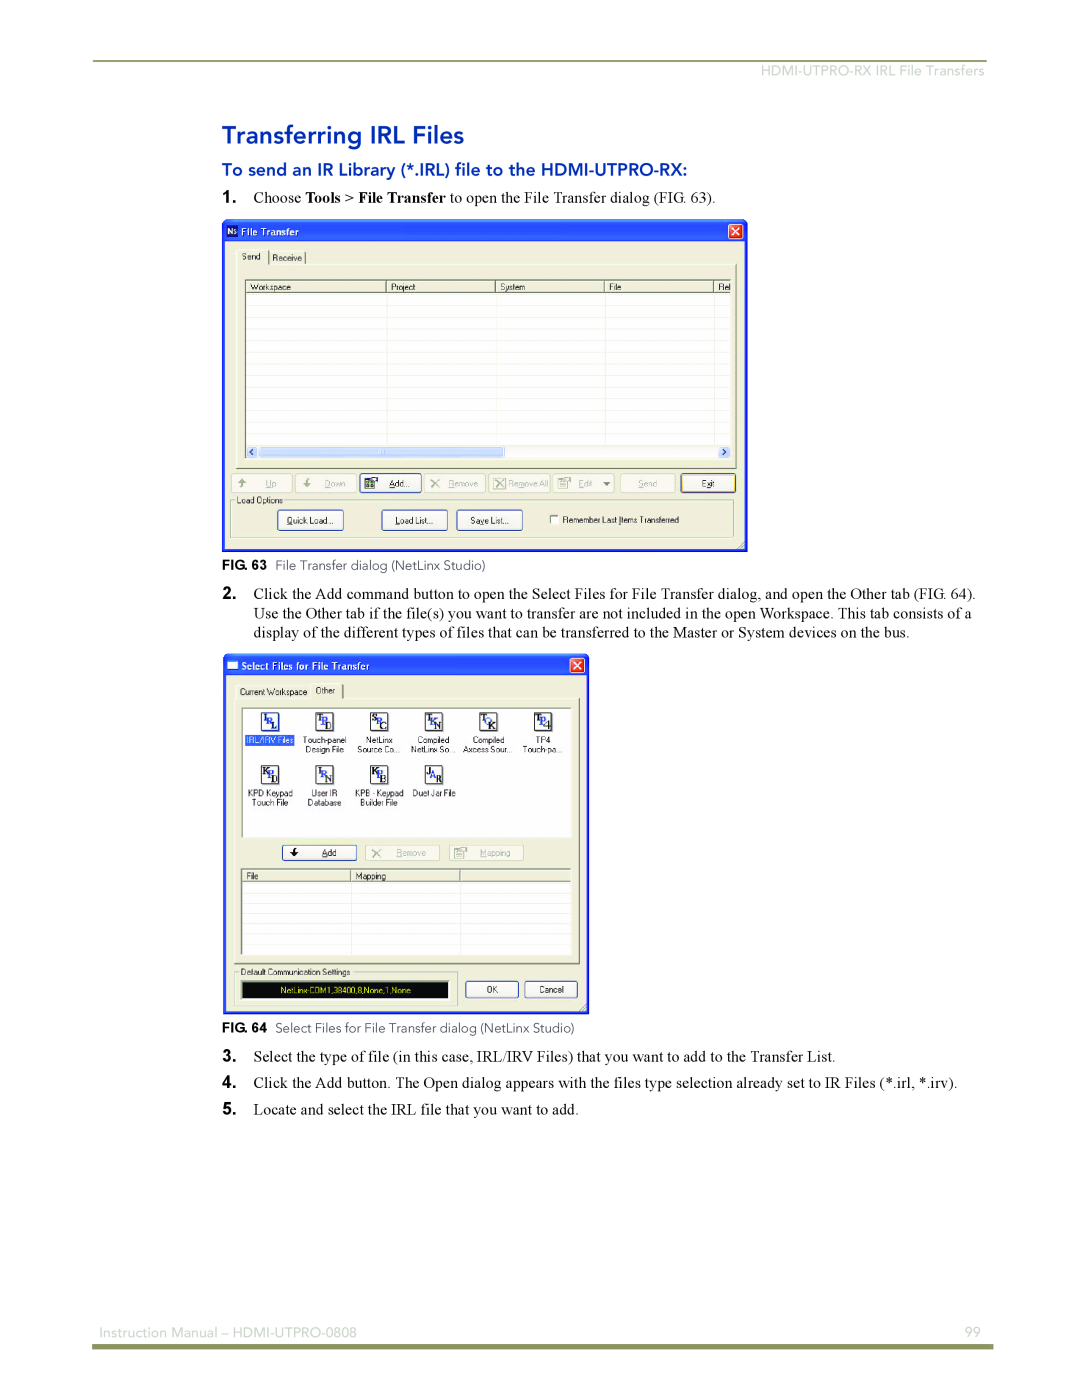 AMX instruction manual Transferring IRL Files, HDMI-UTPRO-RXIRL File Transfers, Instruction Manual – HDMI-UTPRO-0808 